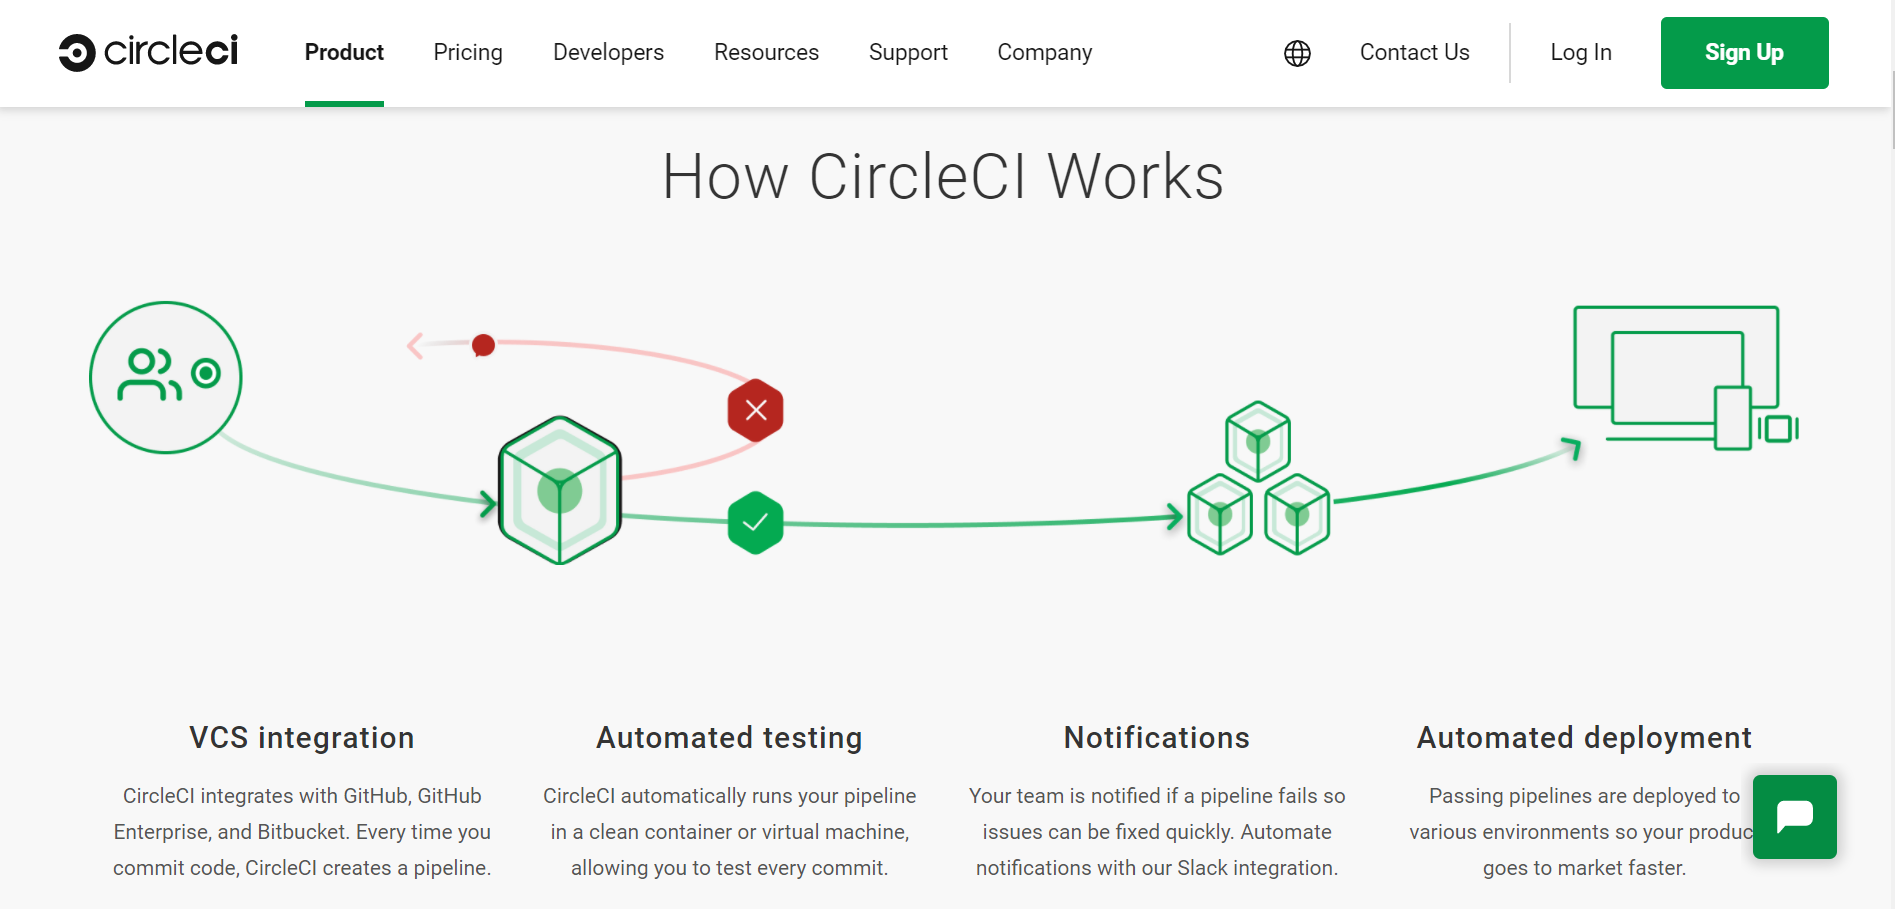 circleci product / service